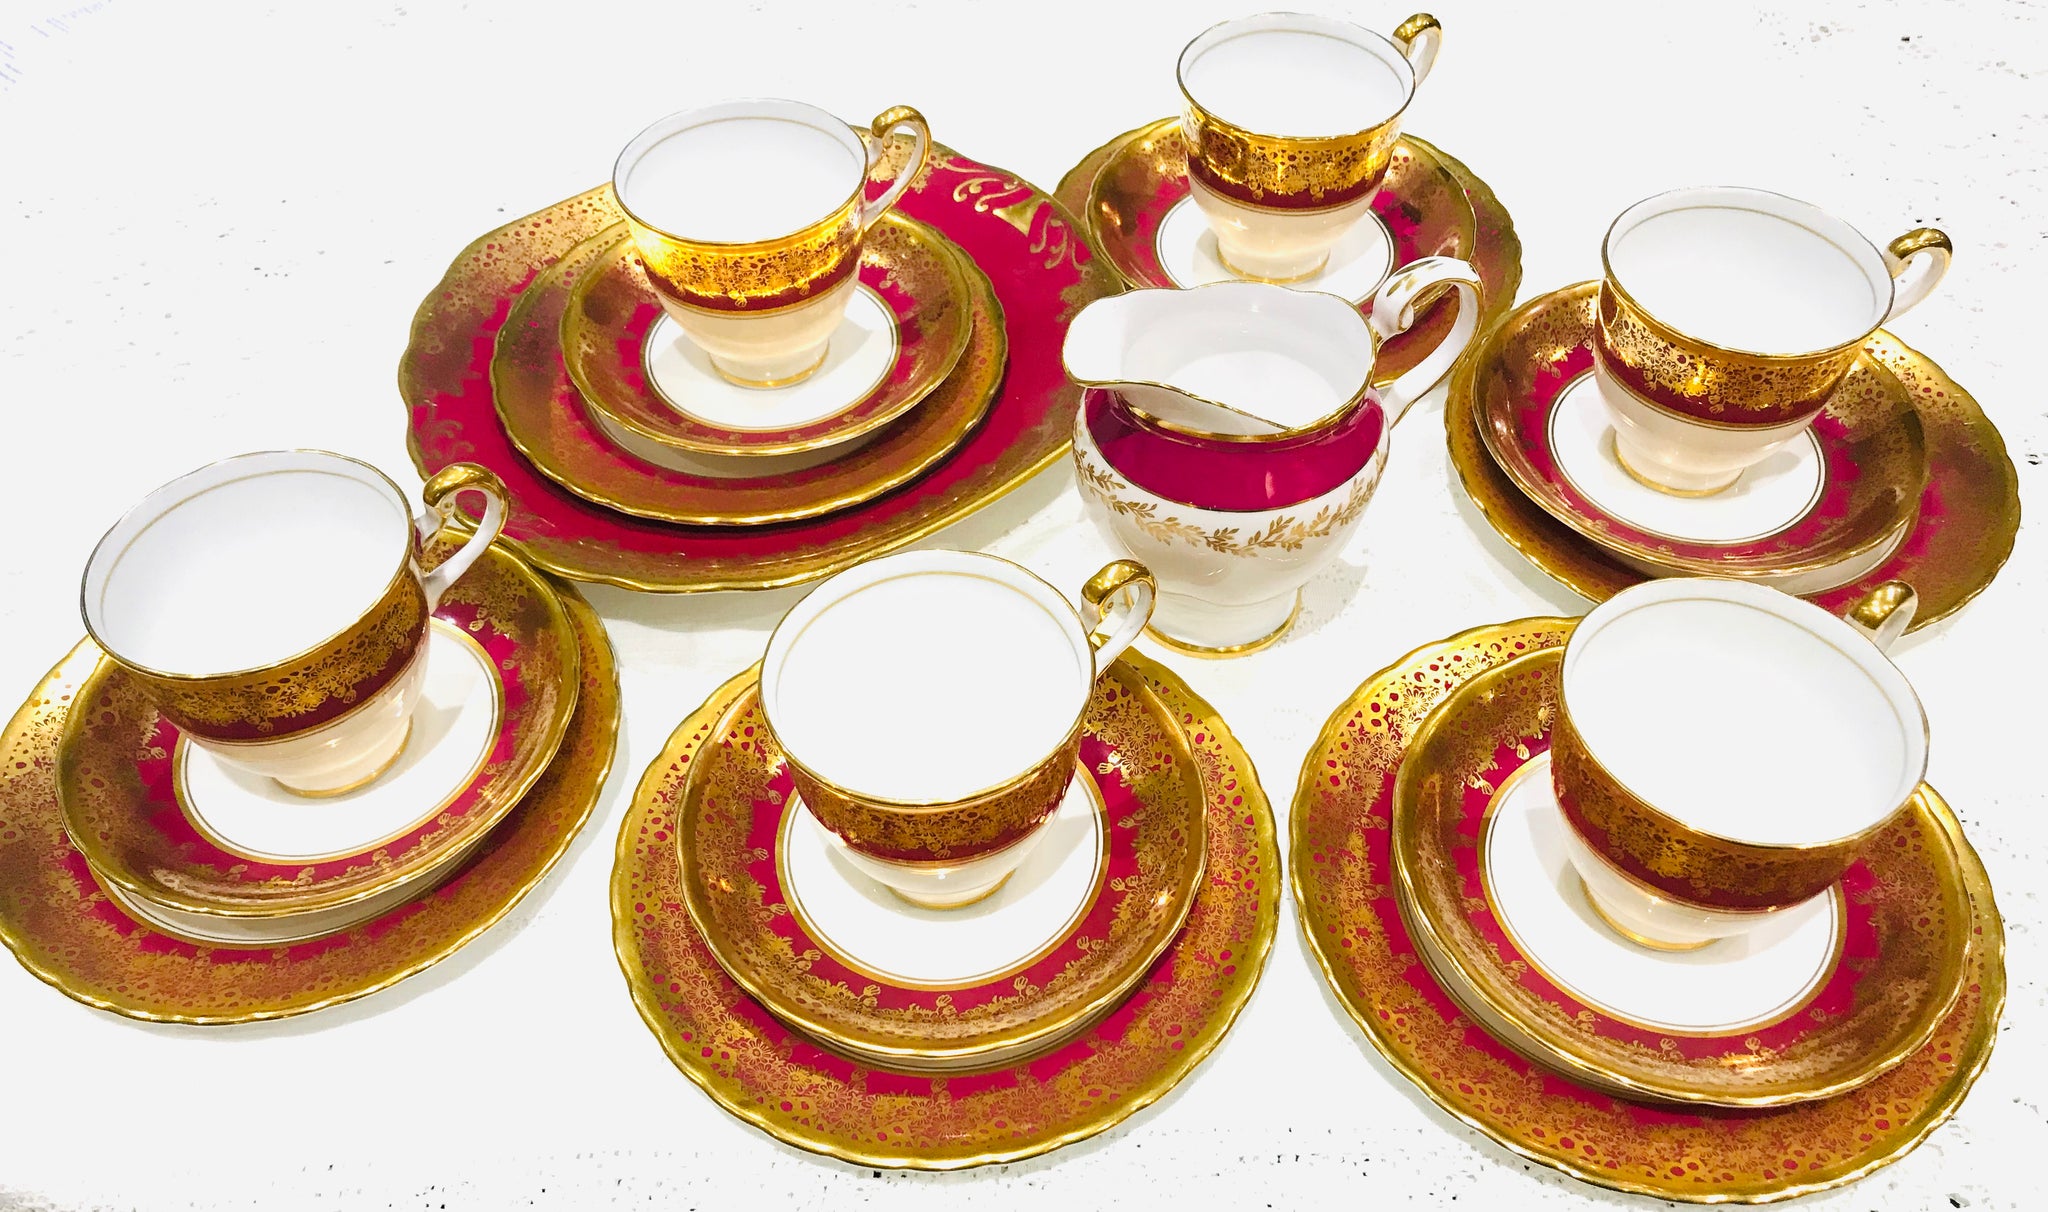 New Chelsea Red & Gold Christmas Tea Set